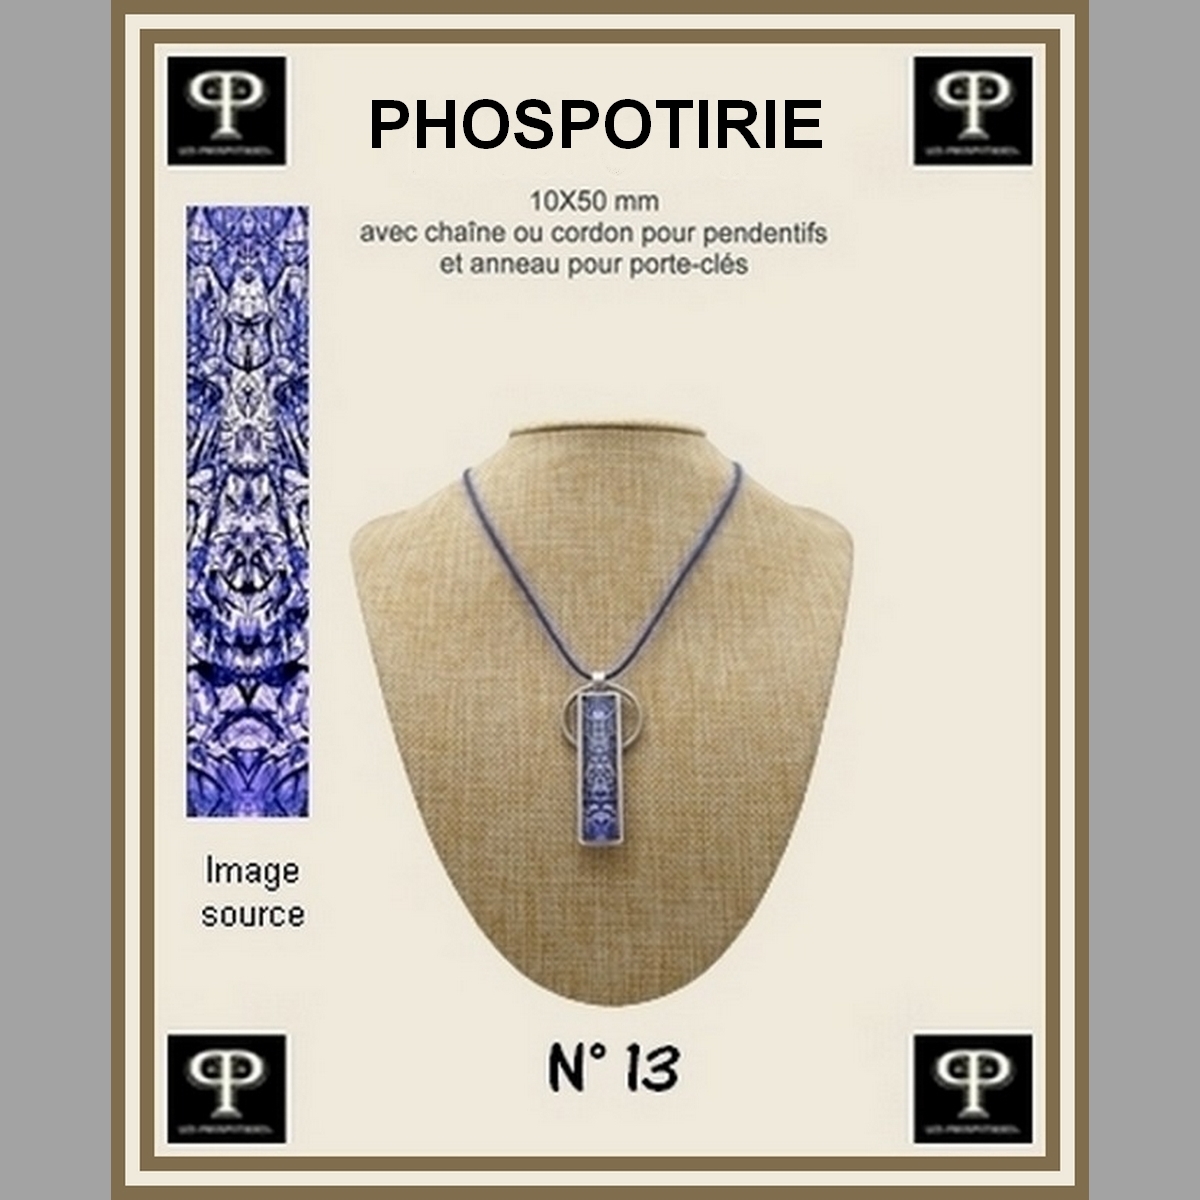 Phospotirie version TOTEM 10X50 mm N°13 pour pendentifs ou porte-clés